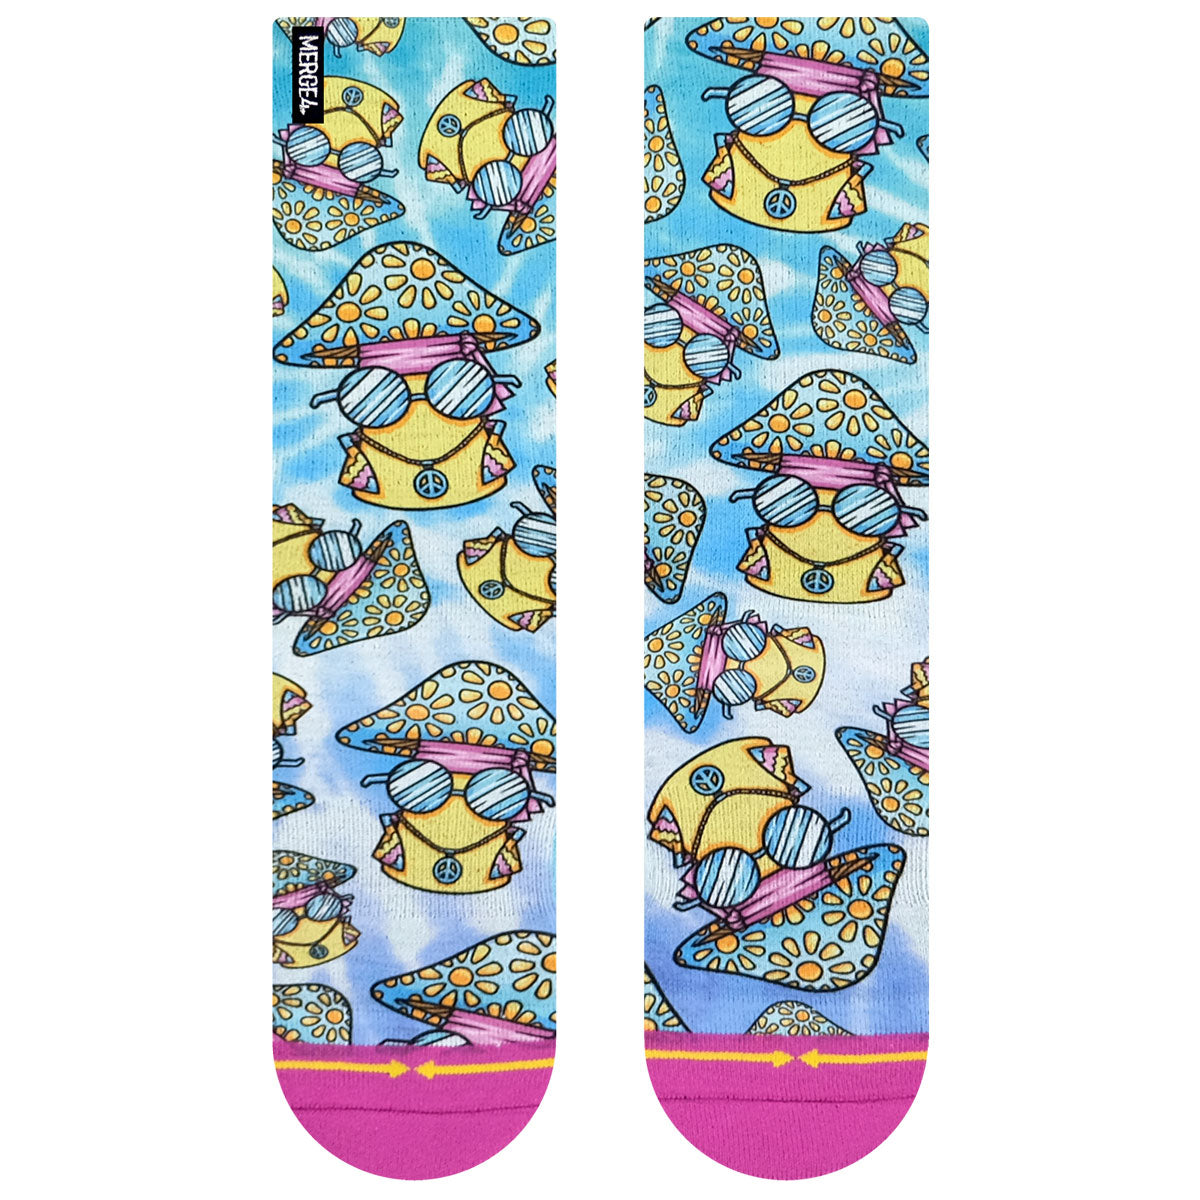 Merge4 Chump Magic's Hippie Shroom Socks image 2